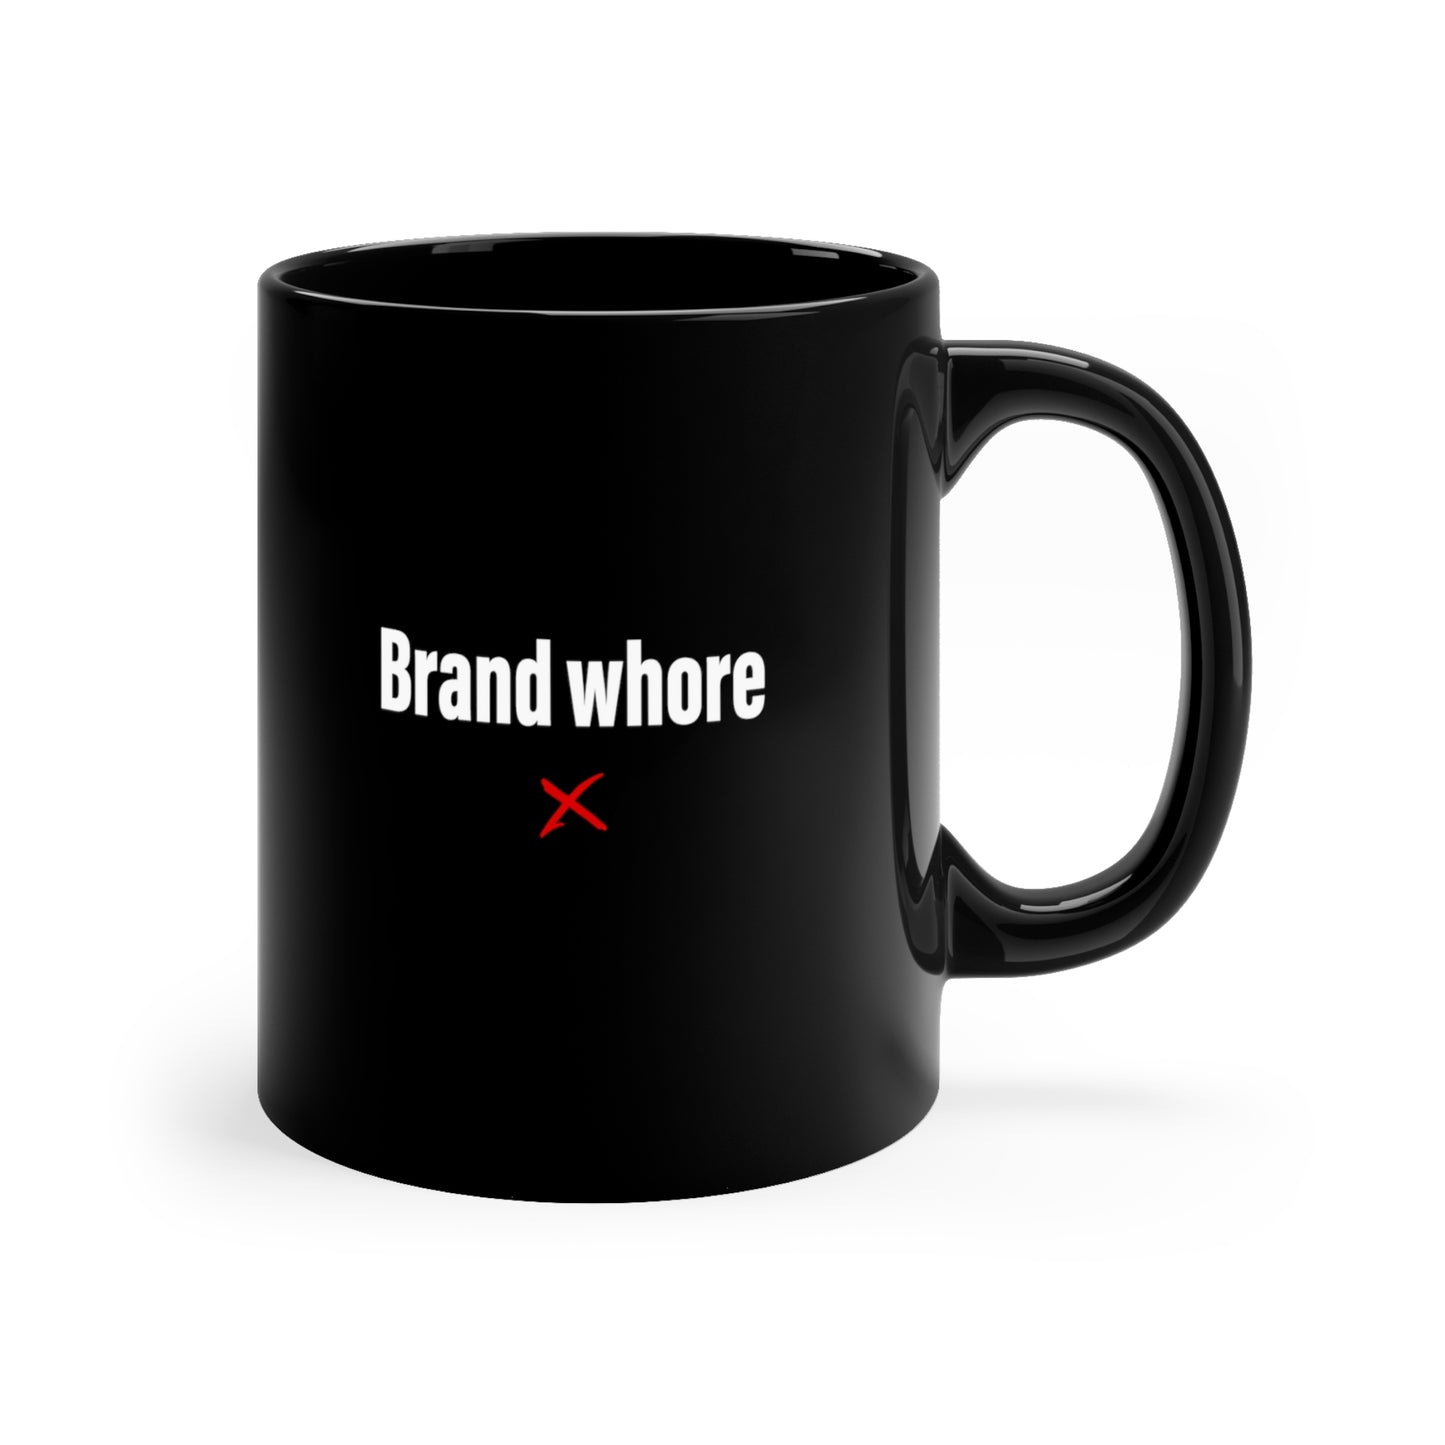 Brand whore - Mug